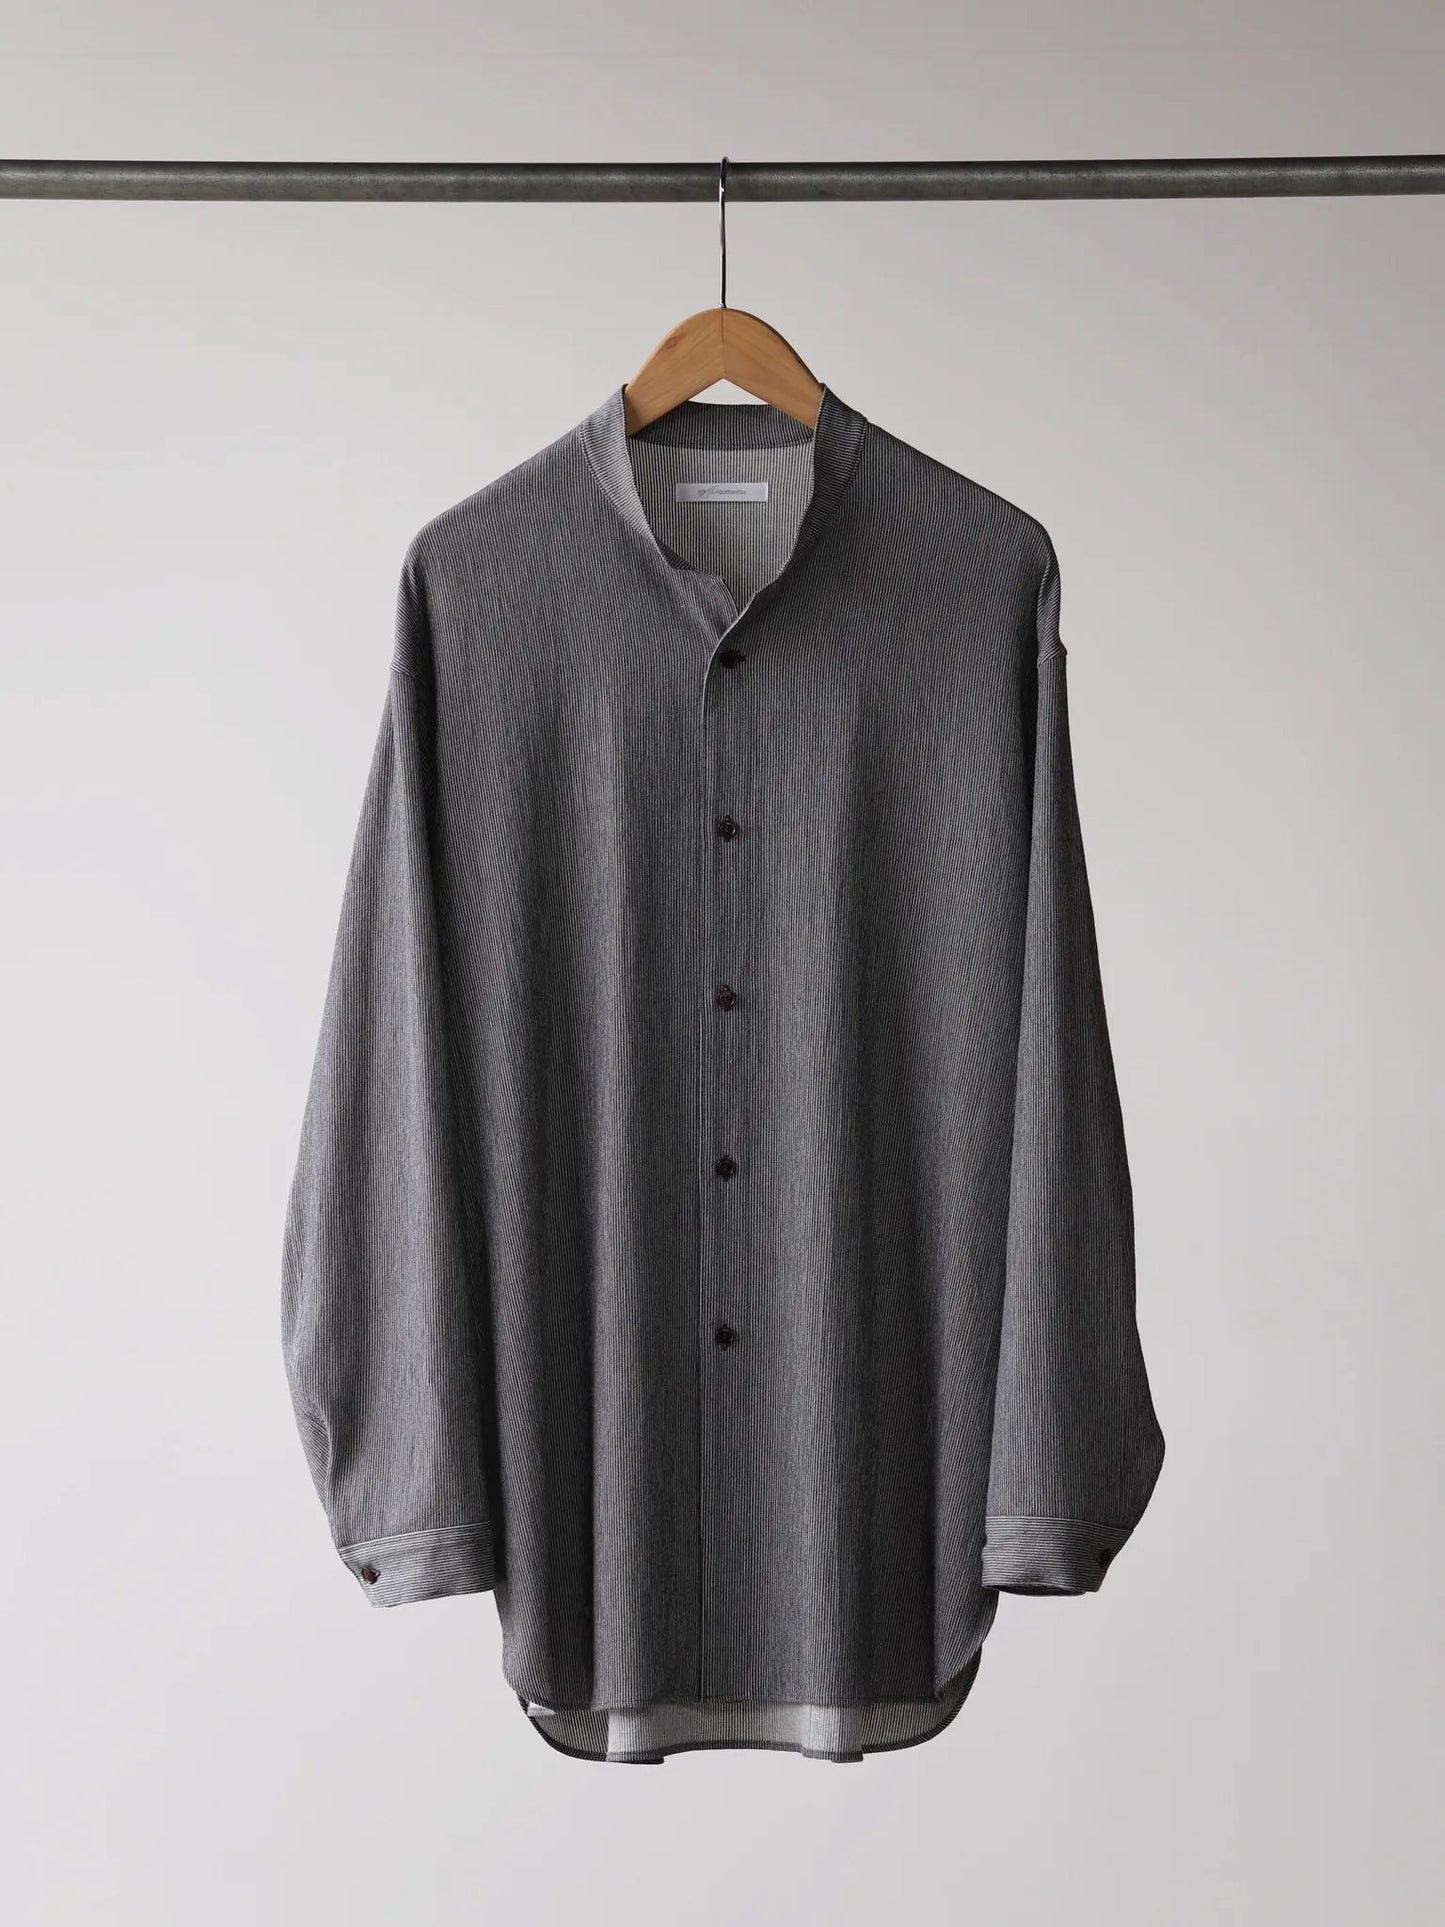 tilt-the-authentics-top-pique-stand-collar-shirt-gray-1